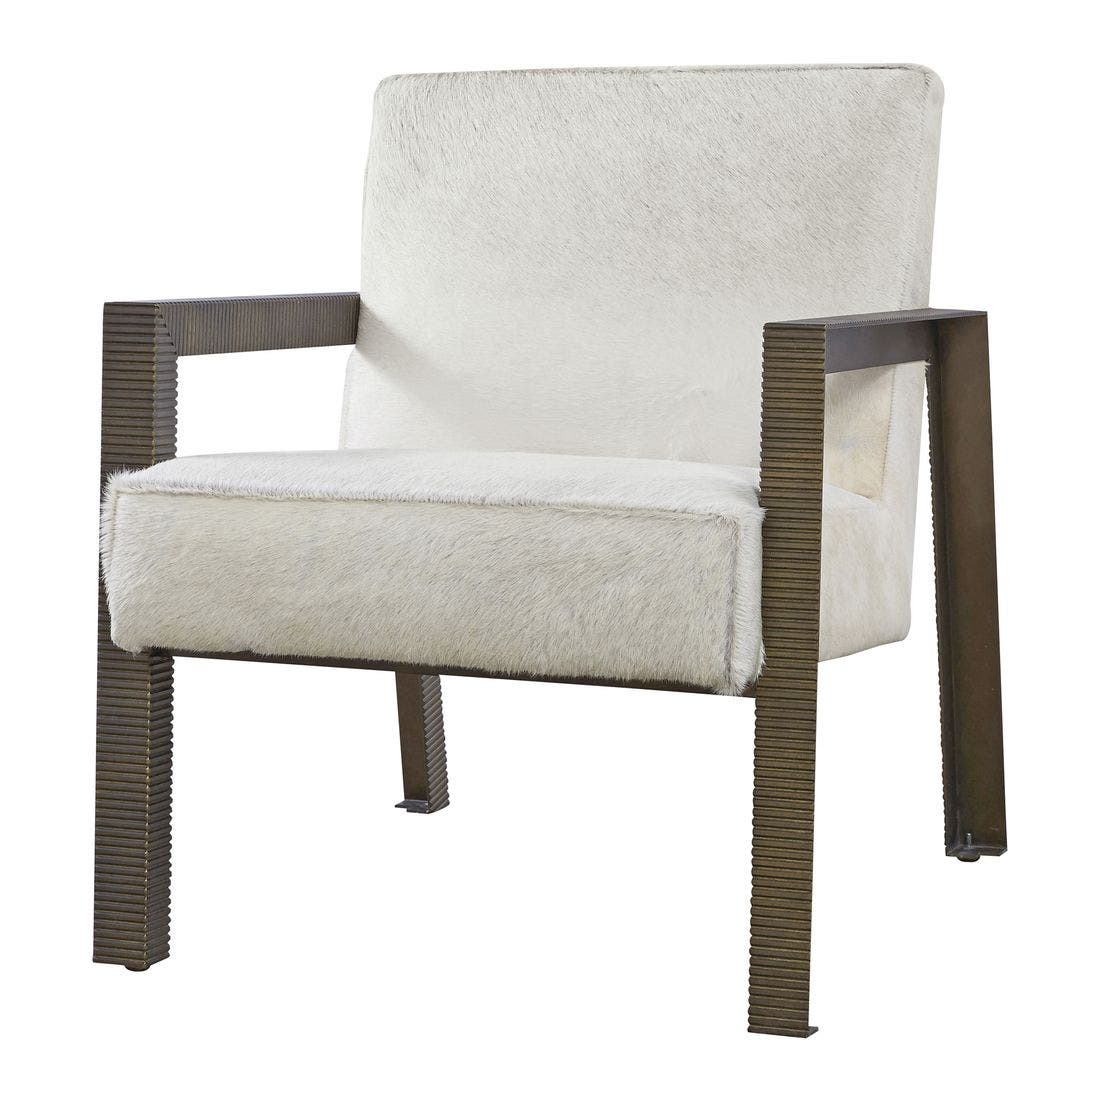 19134965-687545-670-furniture-sofa-recliner-armchair-01